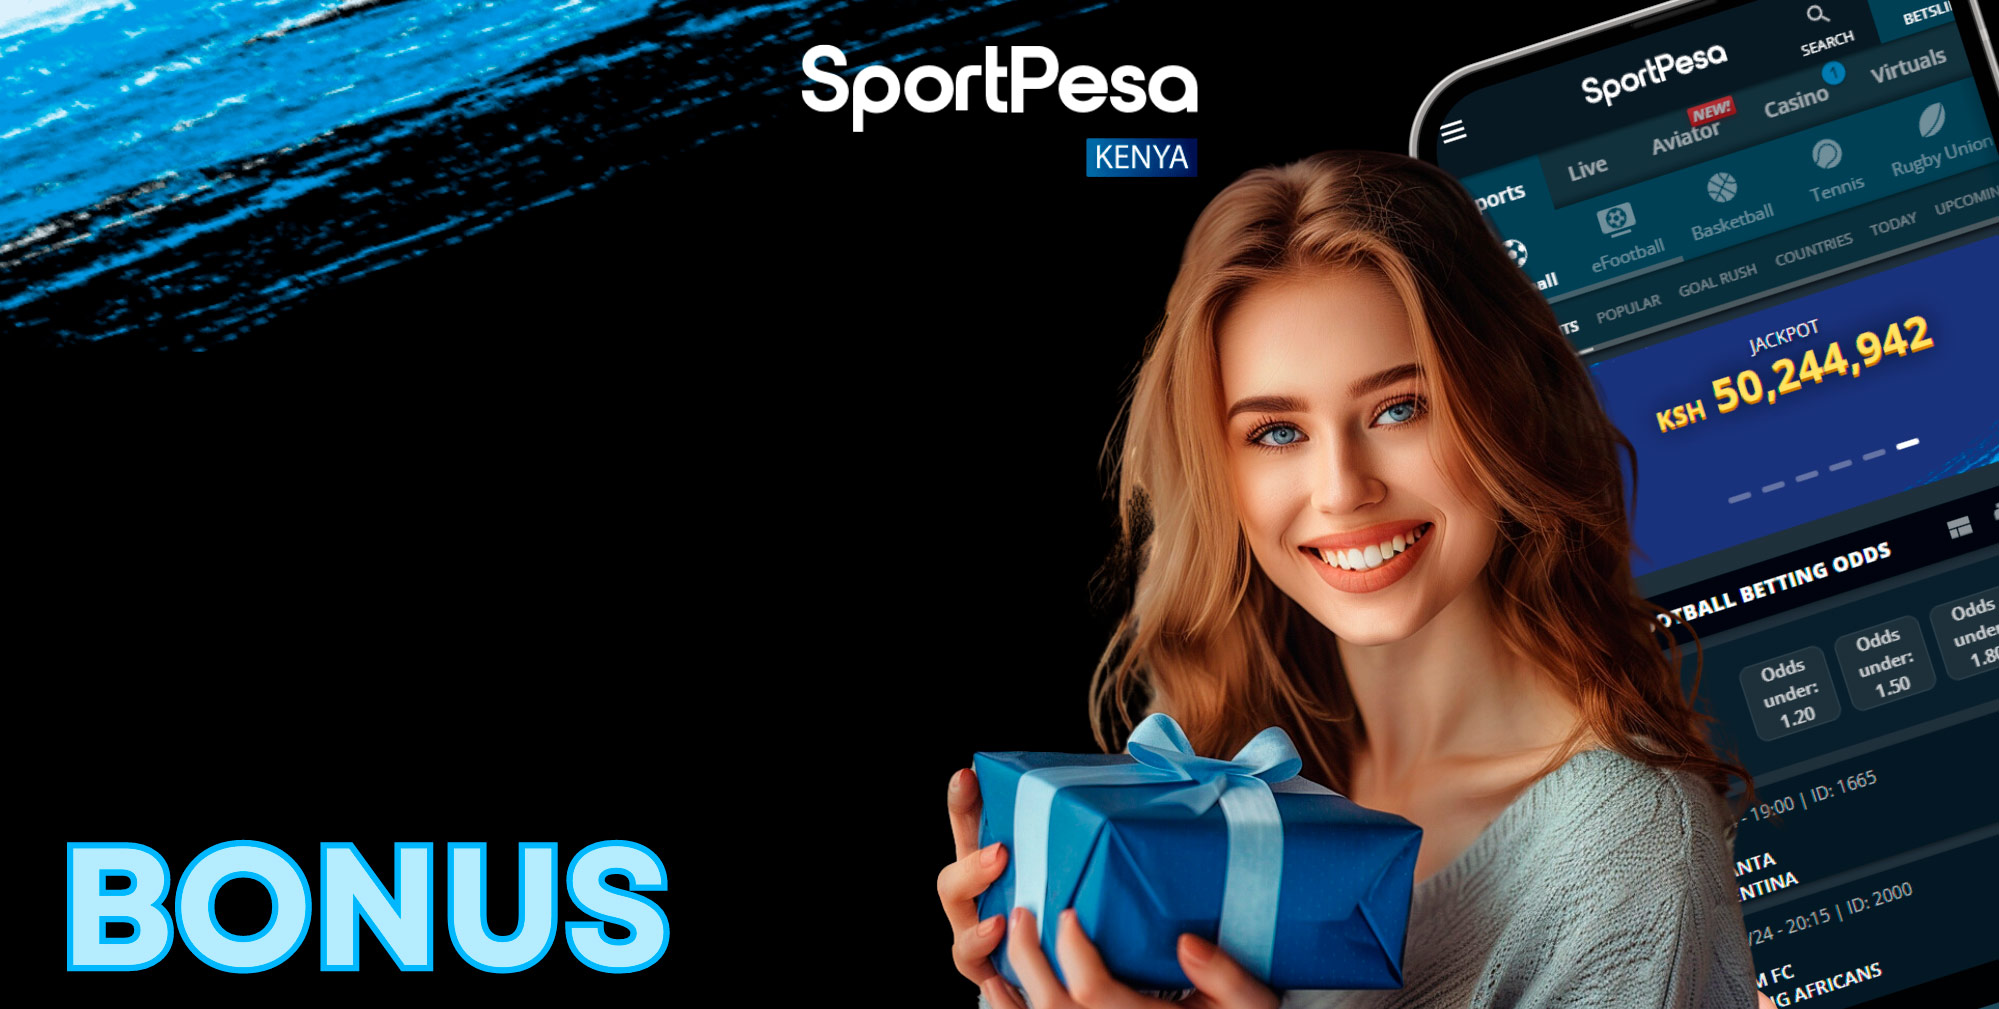 The Sportpesa app offers a lucrative welcome bonus